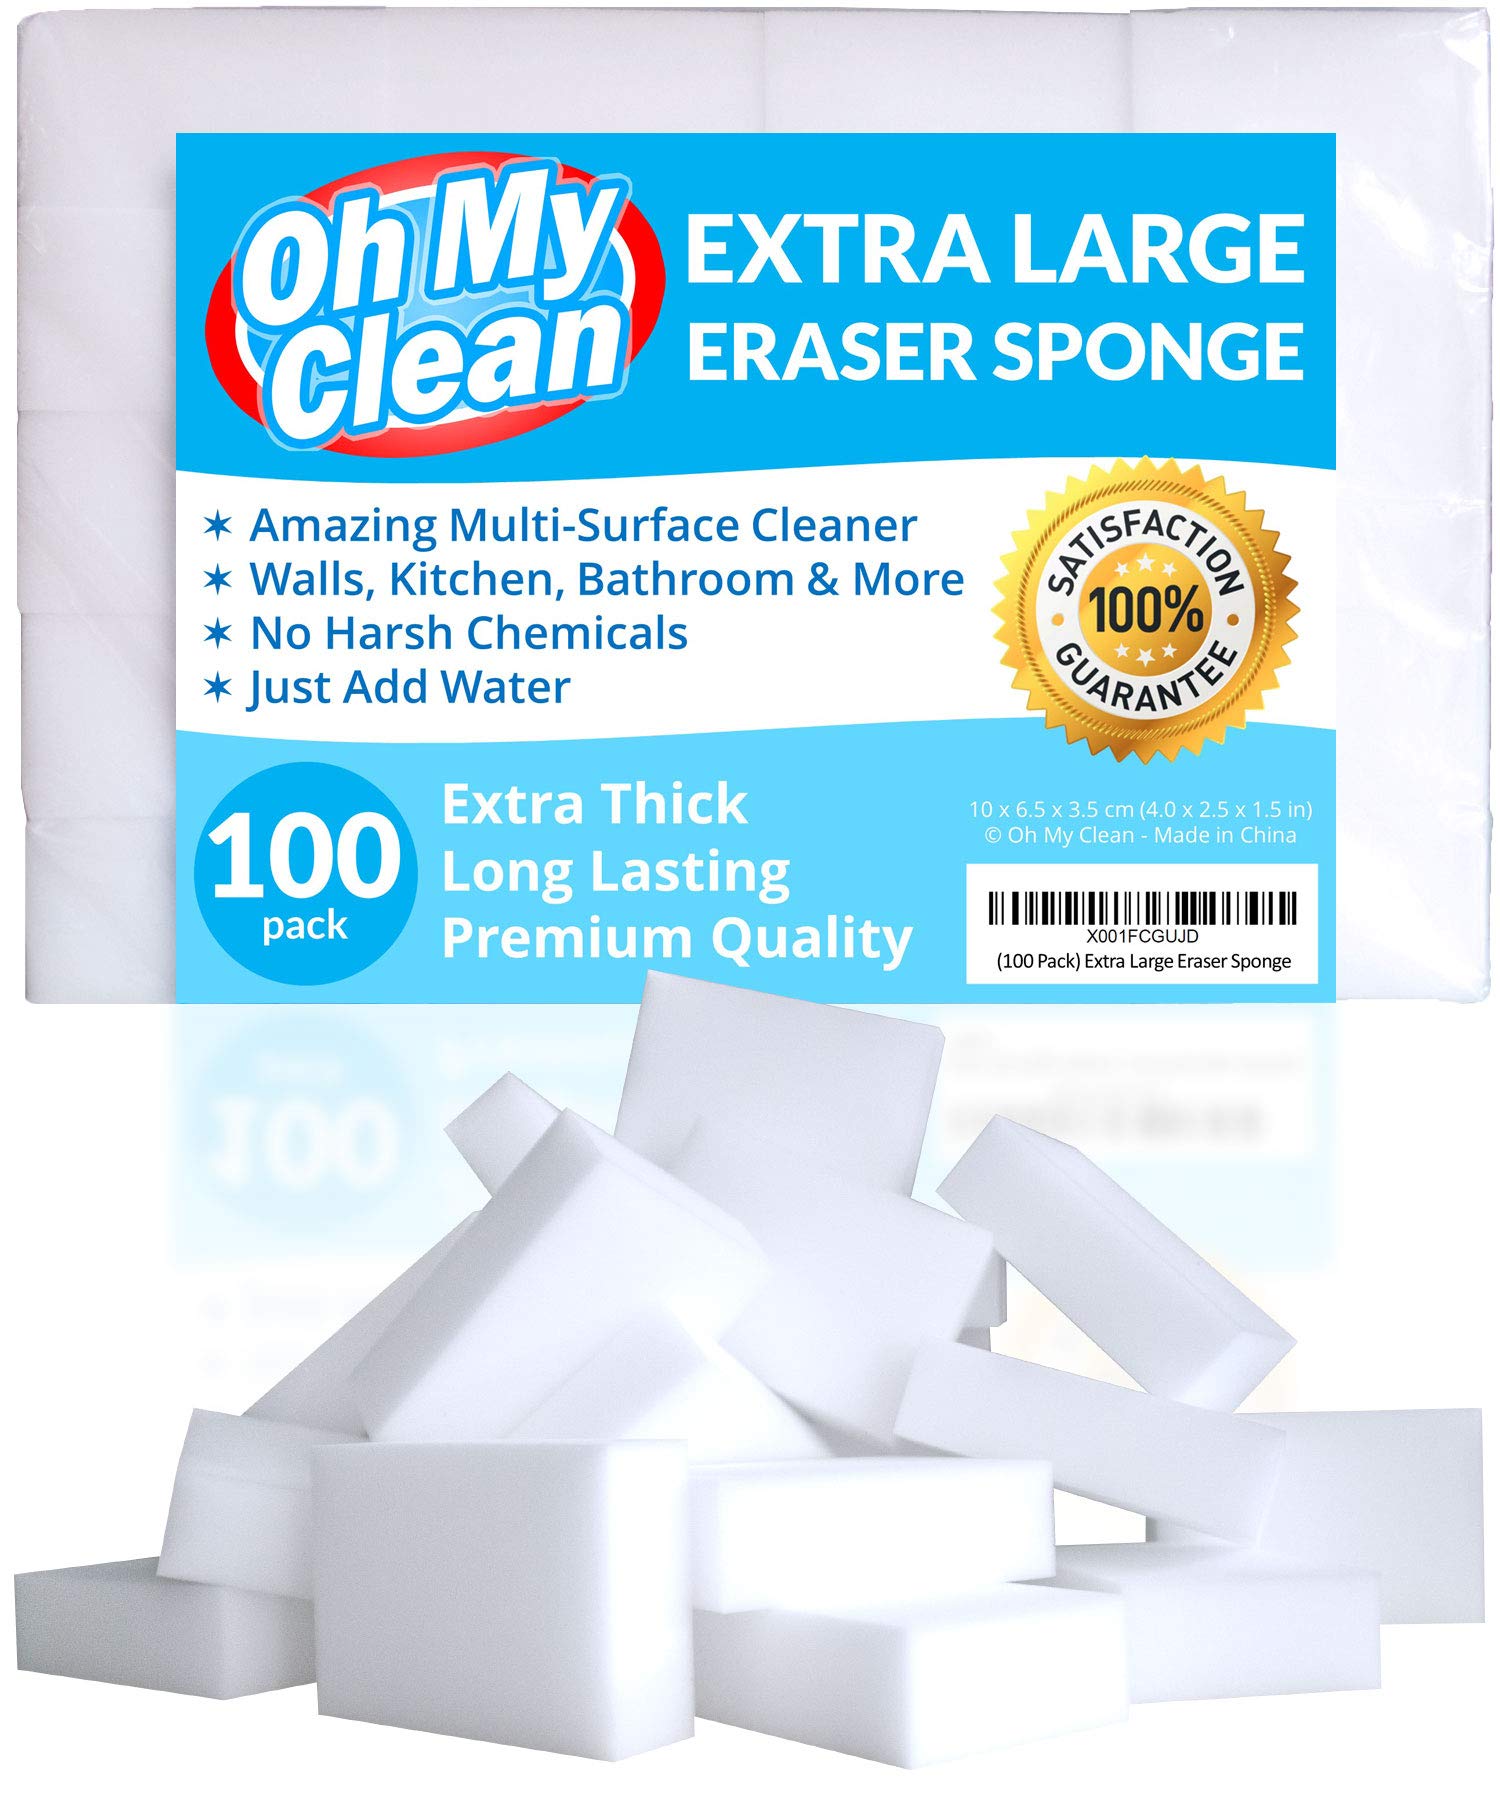 (100 Pack) Extra Large Eraser Sponge - Extra Thick, Long Lasting, Premium Melamine Sponges in Bulk - Multi Surface Power Scrubber Foam Cleaning Pads - Bathtub, Floor, Baseboard, Bathroom, Wall Cleaner